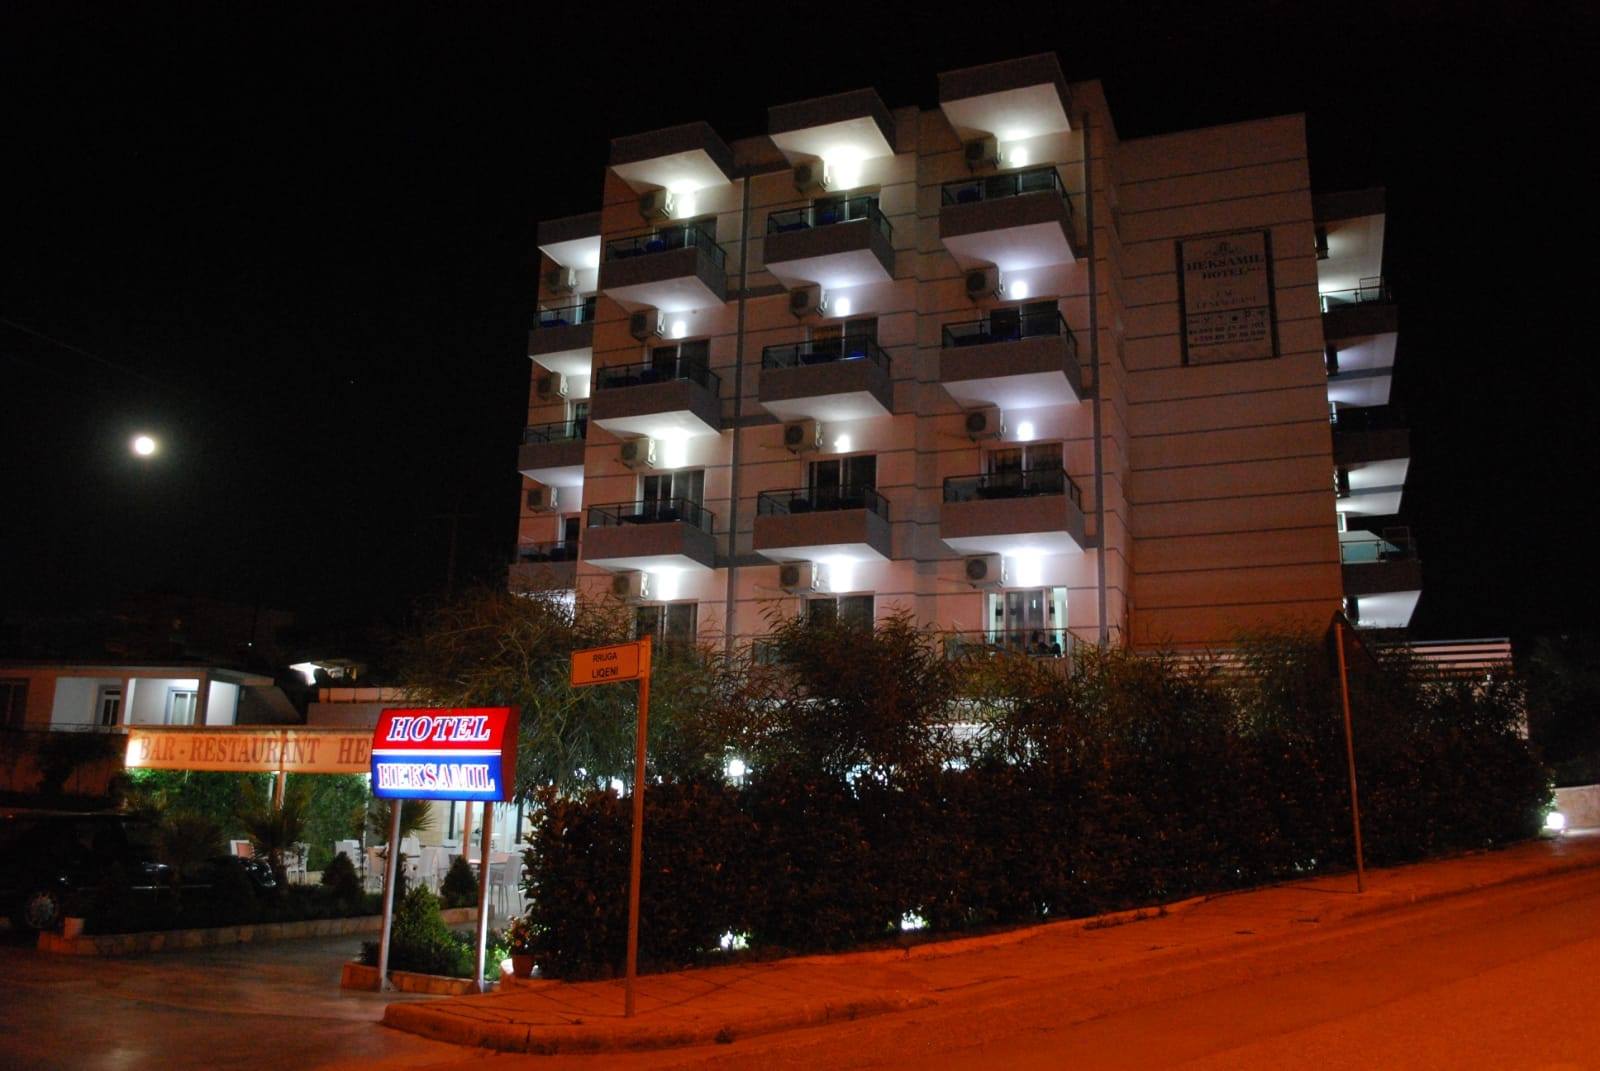 Letovanje Albanija hoteli, Ksamil, autobus,Heksamil,noću